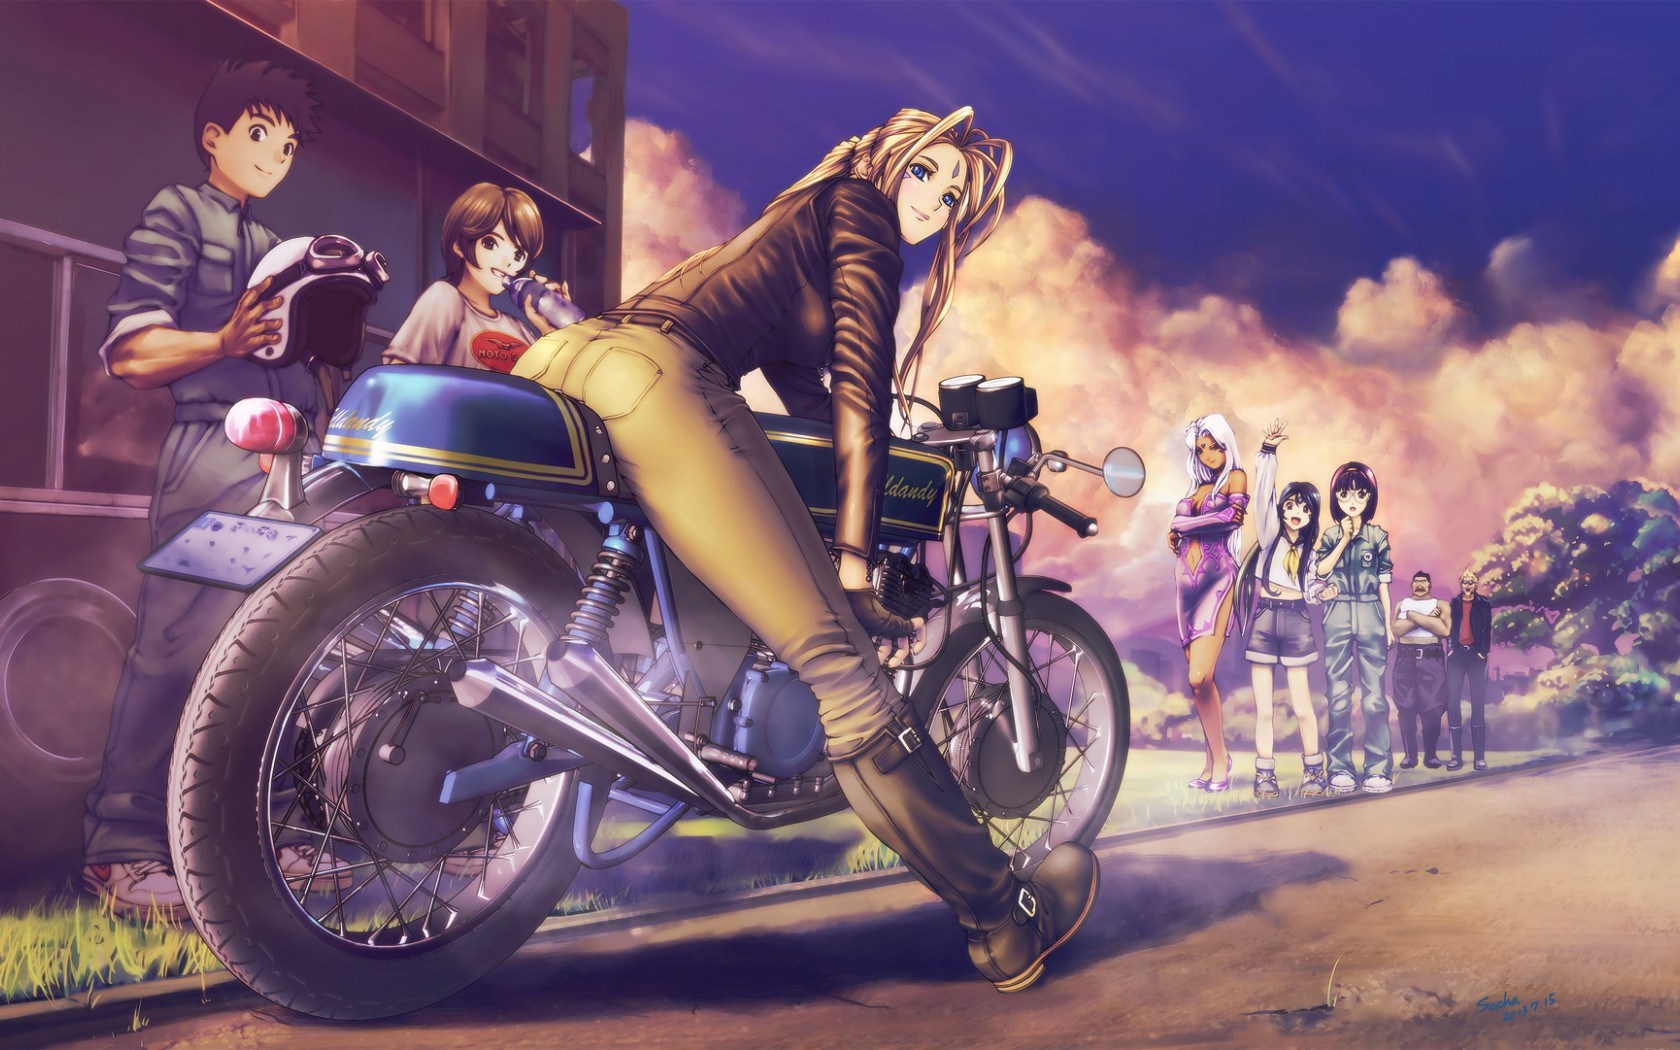 Manga Anime Wallpaper Art Guy Motorcycles Sky Coulds